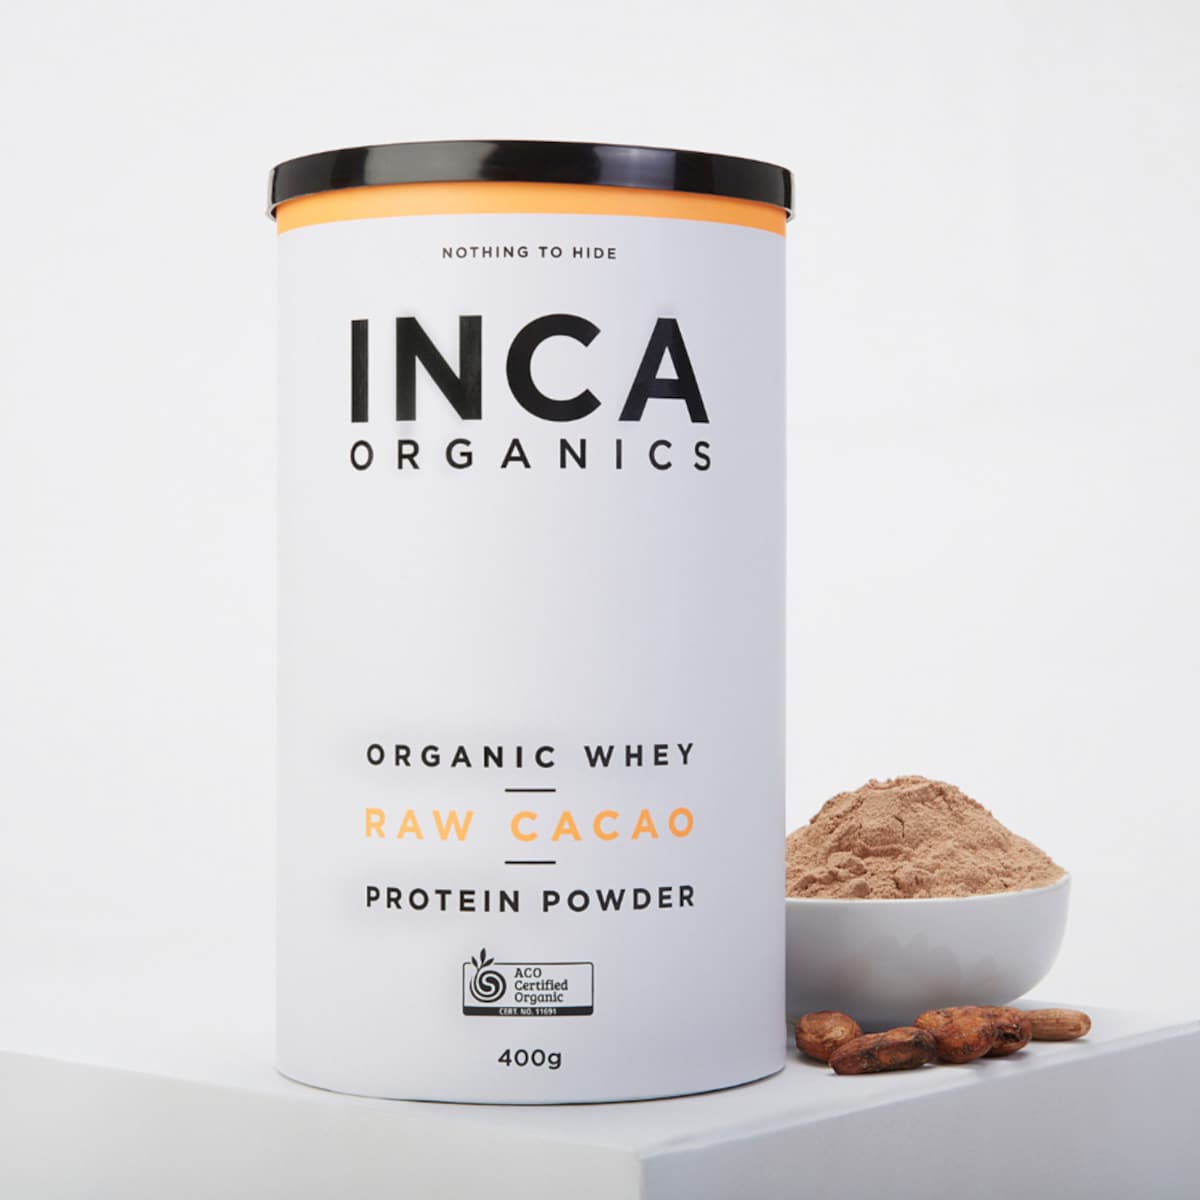 Inca Organics Organic Whey Raw Cacao Protein Powder 400g